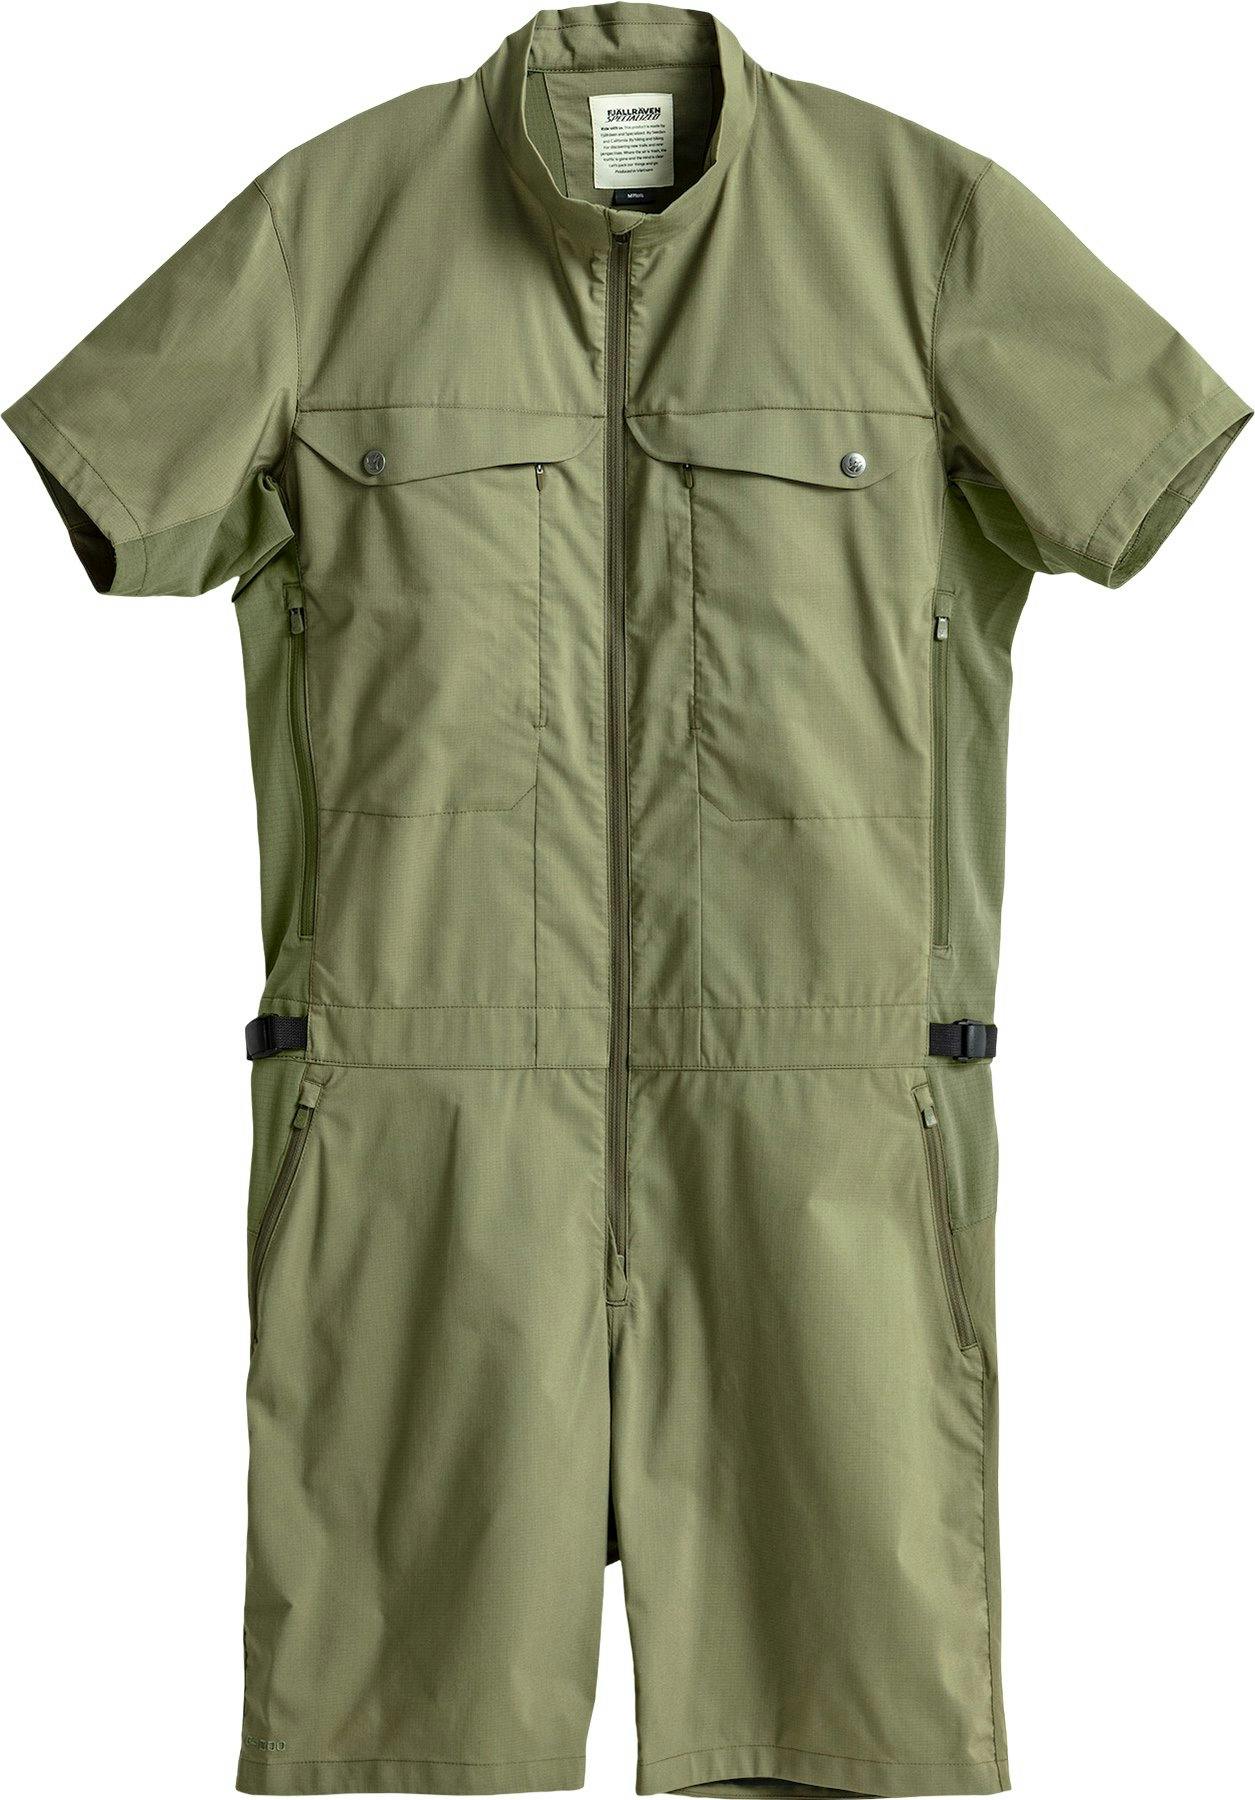 Product image for S/F Sun Field Suit - Men's